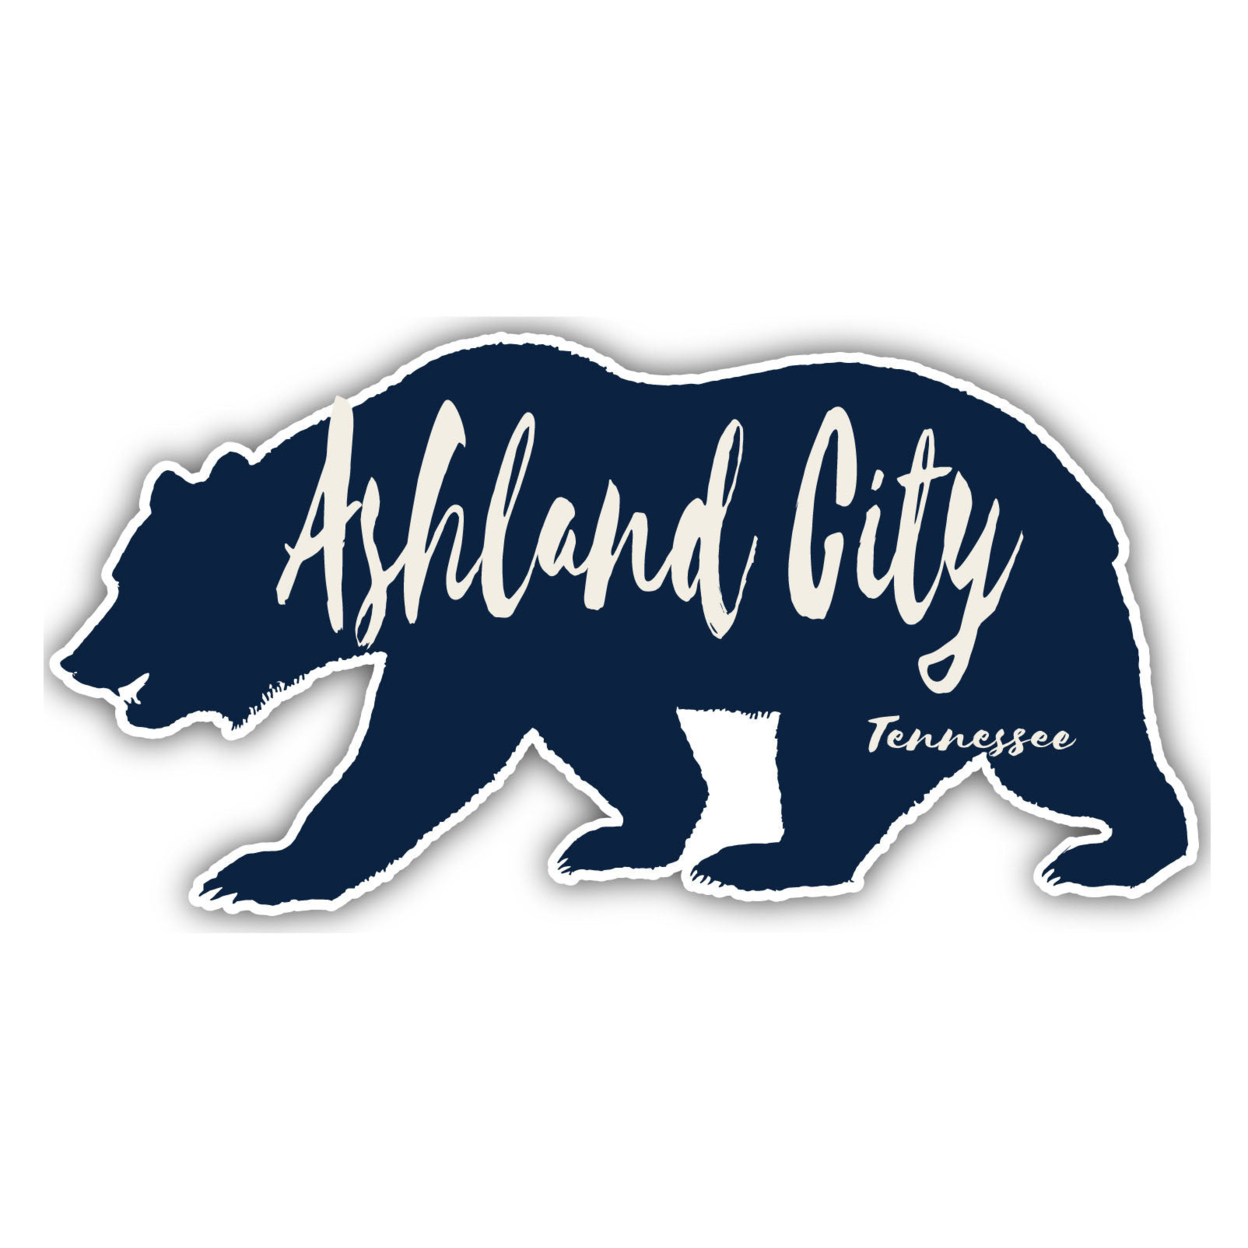 Ashland City Tennessee Souvenir Decorative Stickers (Choose Theme And Size) - Single Unit, 12-Inch, Bear